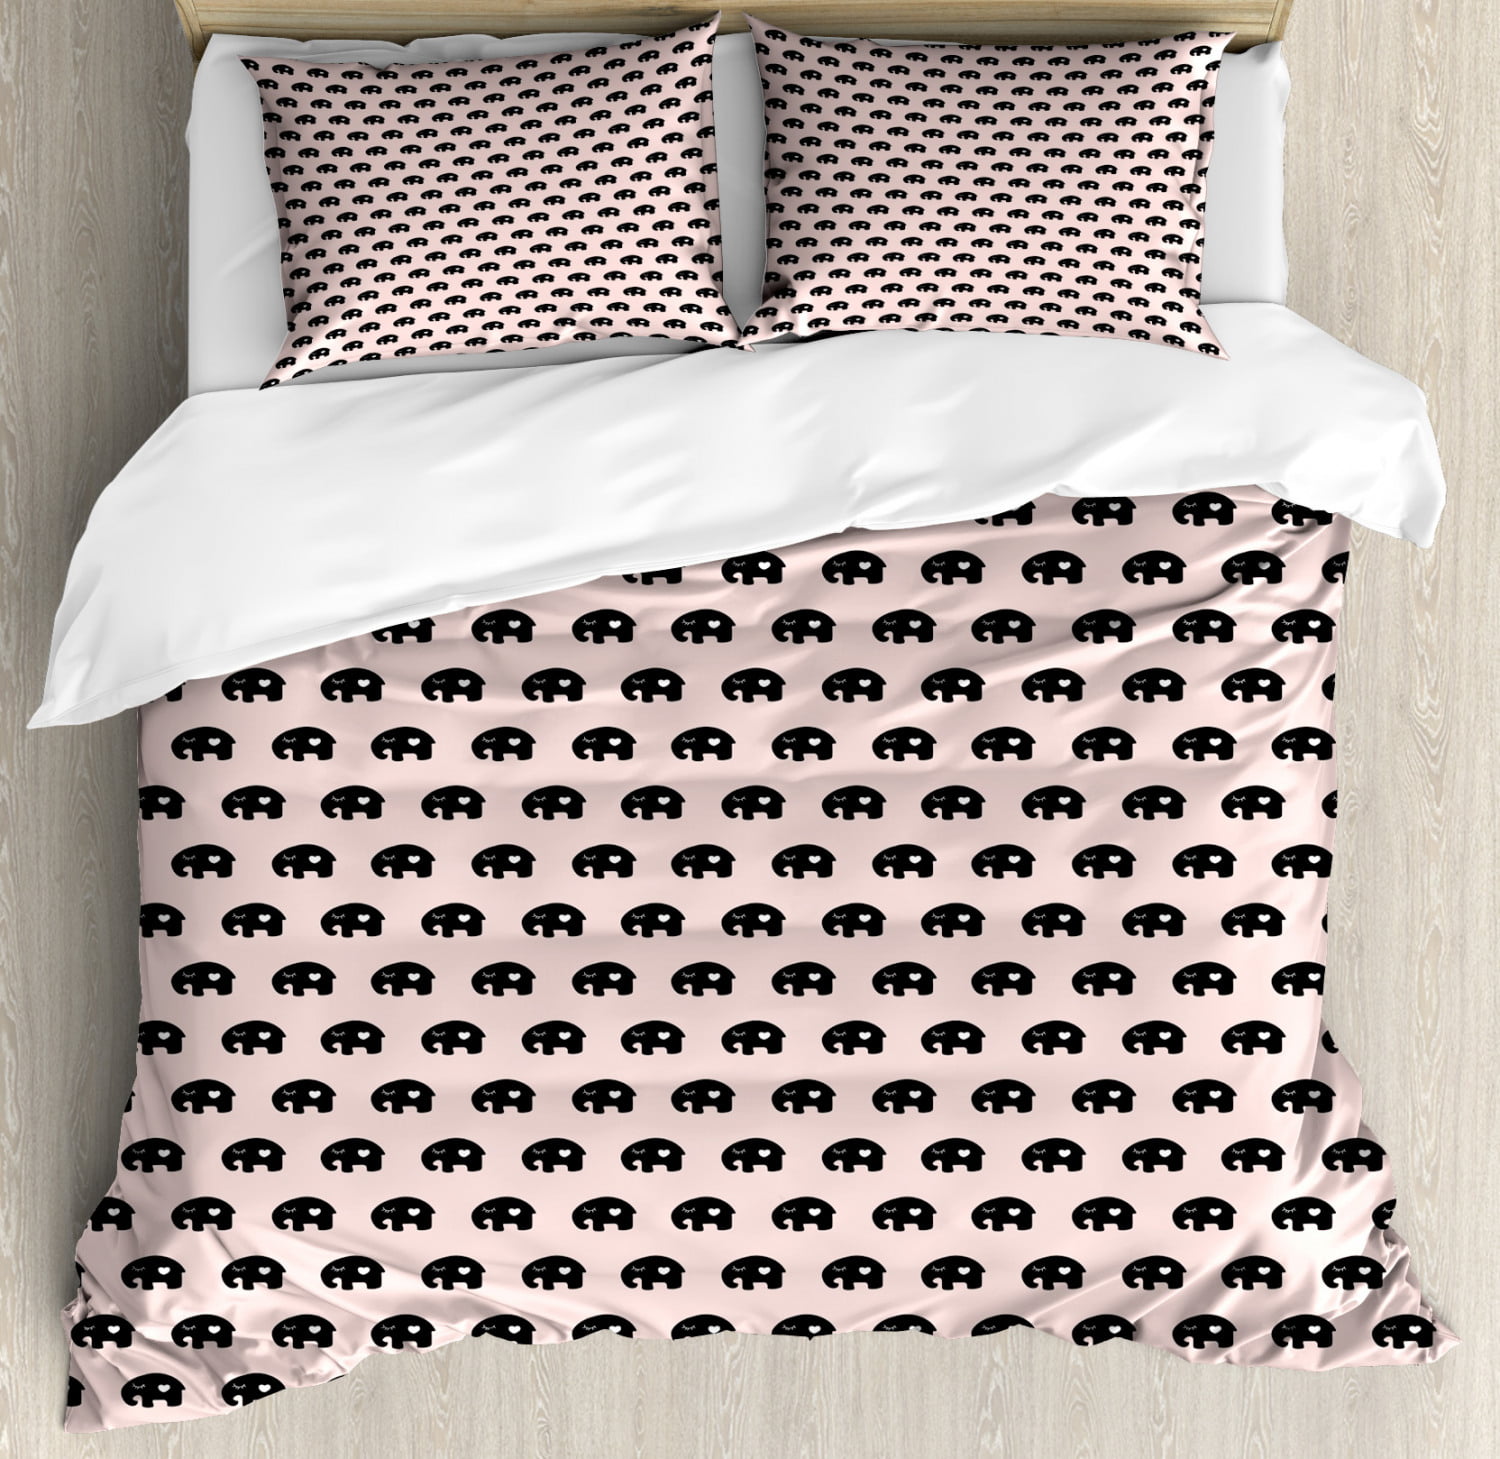 Teddy Fleece Dotted Bedding Covers Set Polka Dot Duvet Cover and Pillow Case Set 